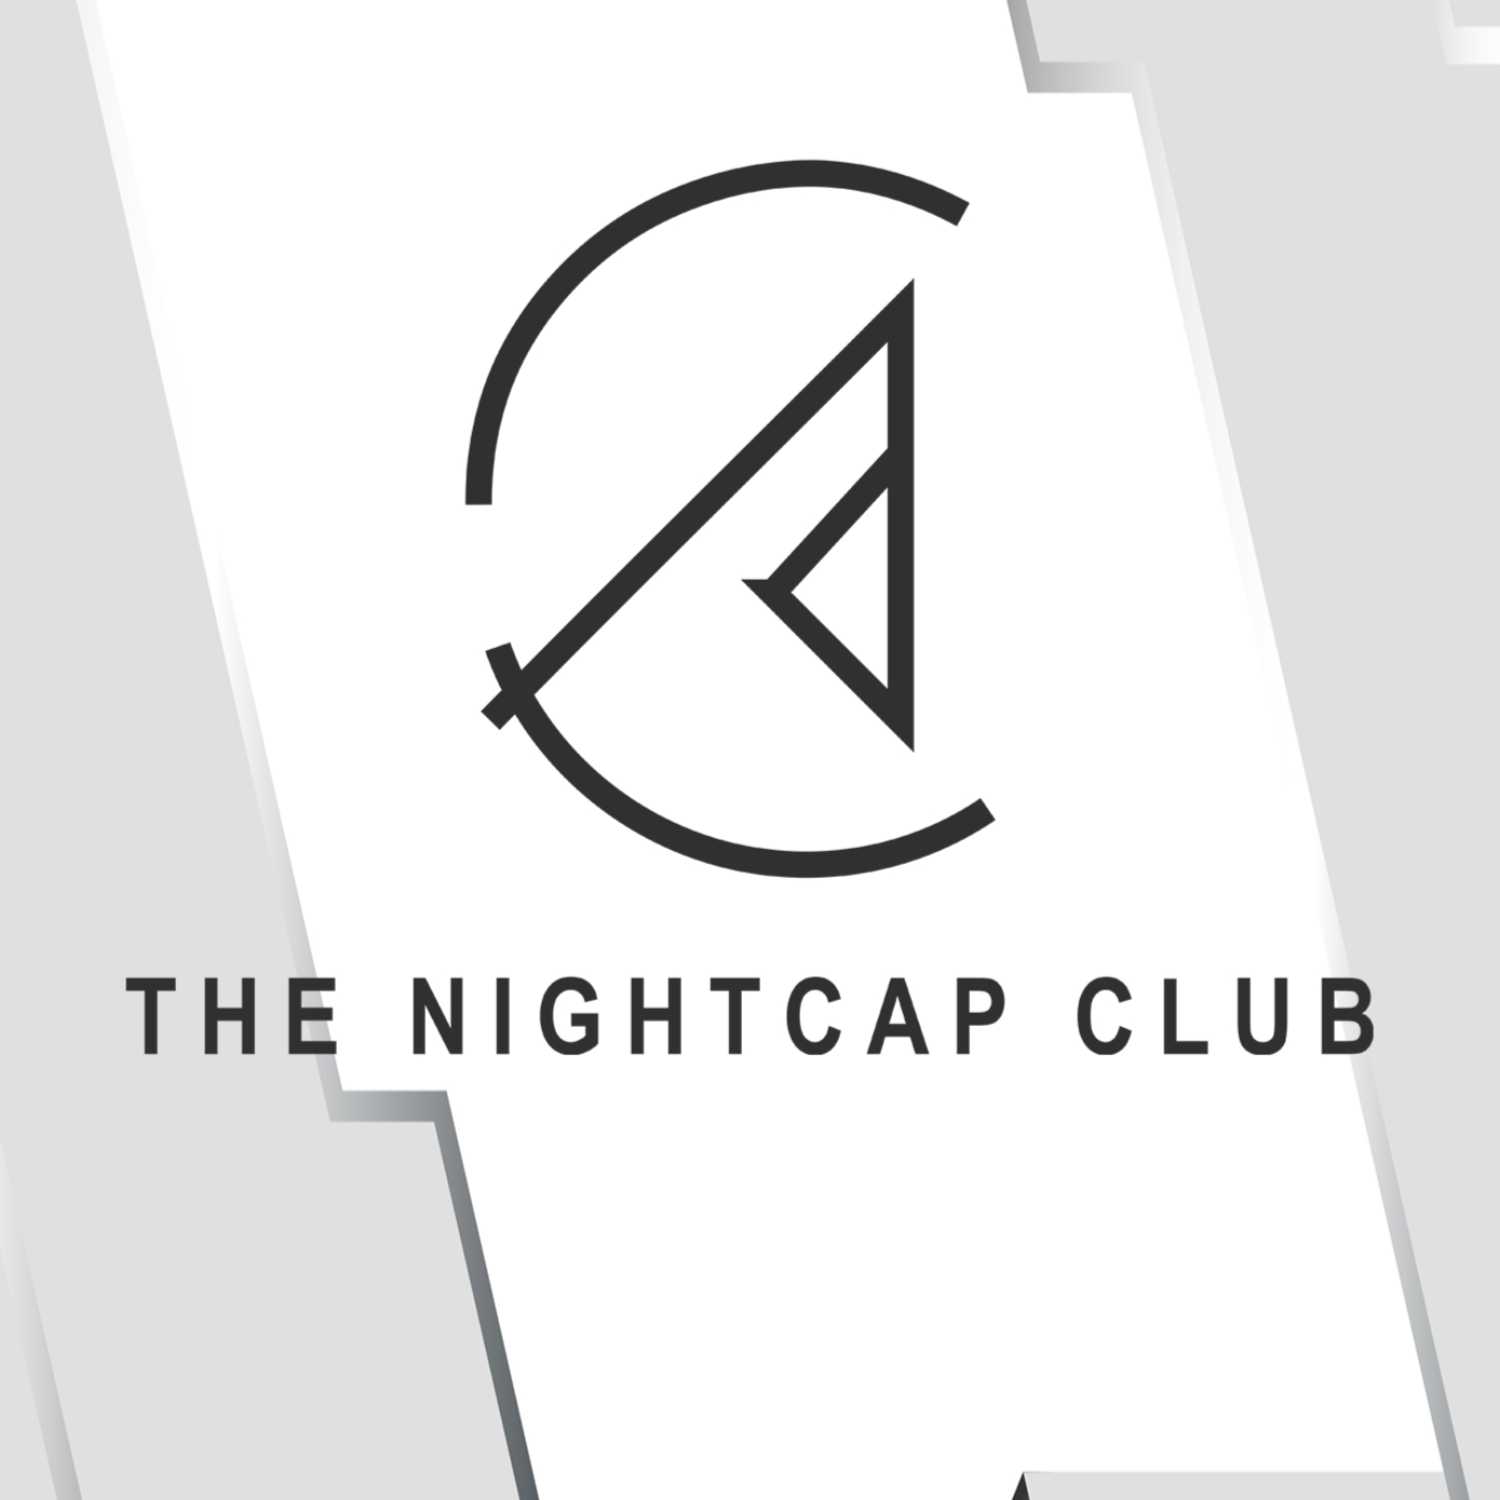 The Nightcap Club